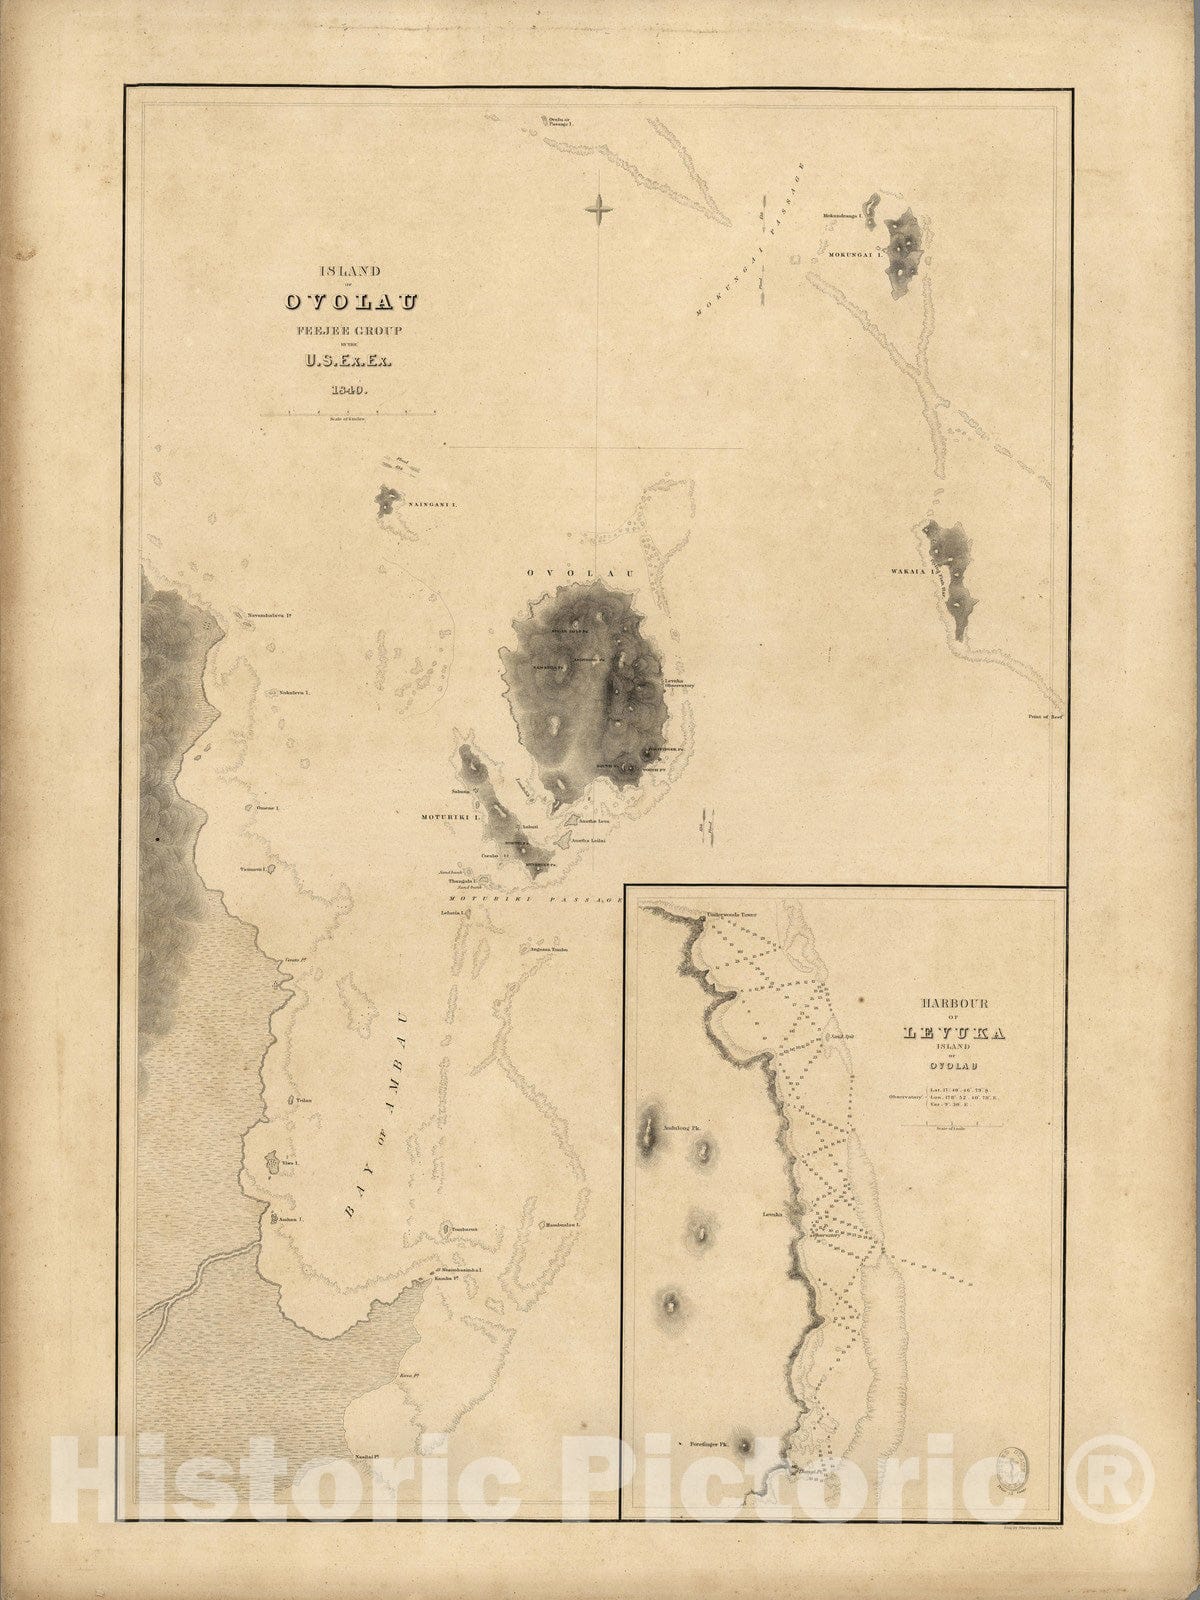 Historic Map : Island of Ovolau (Ovalau), Feejee (Fiji). 1841. Harbour of Levuka. 1841 - Vintage Wall Art